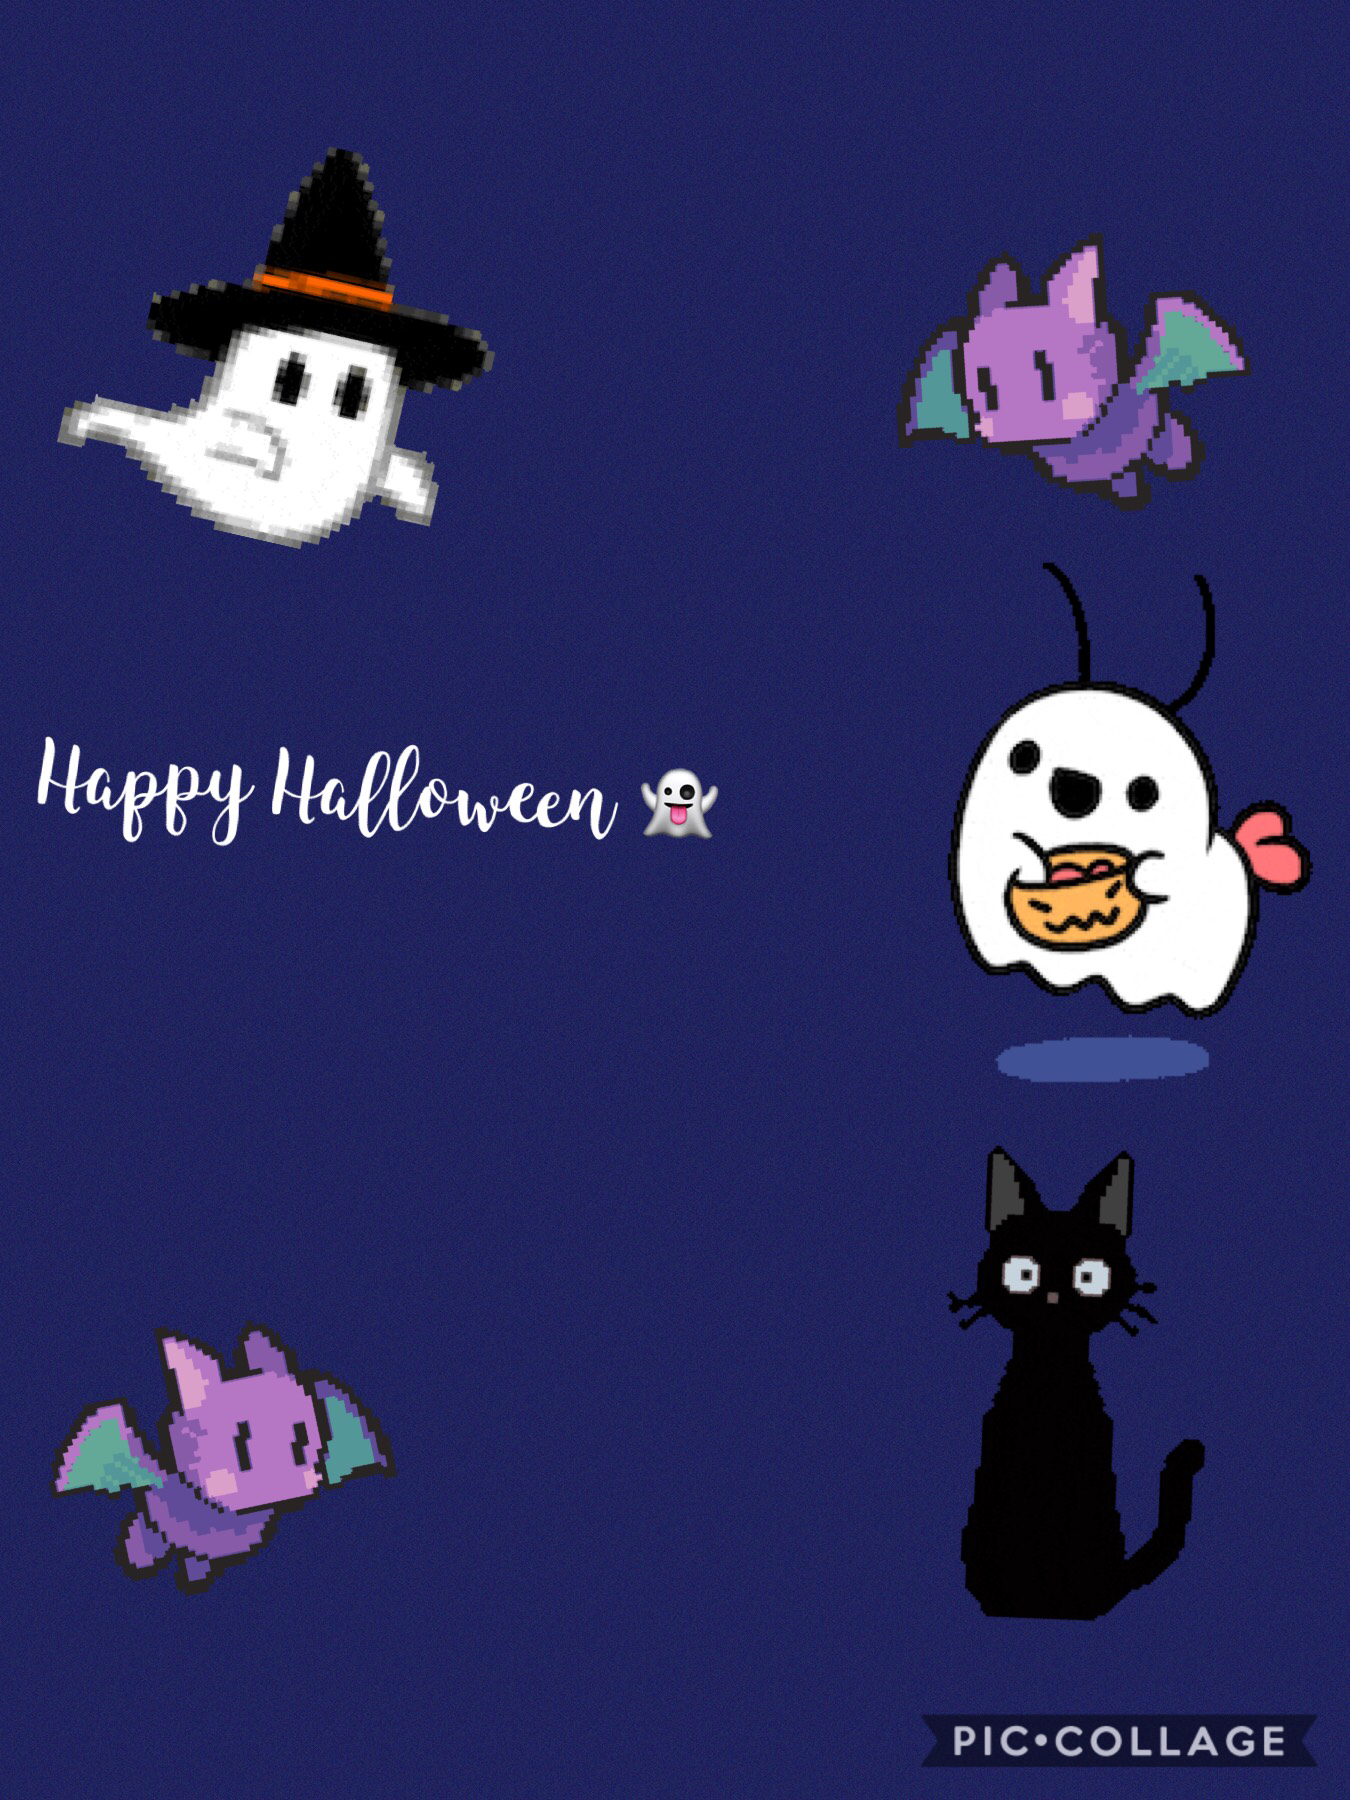 Happy (late) Halloween!!! 🎃 